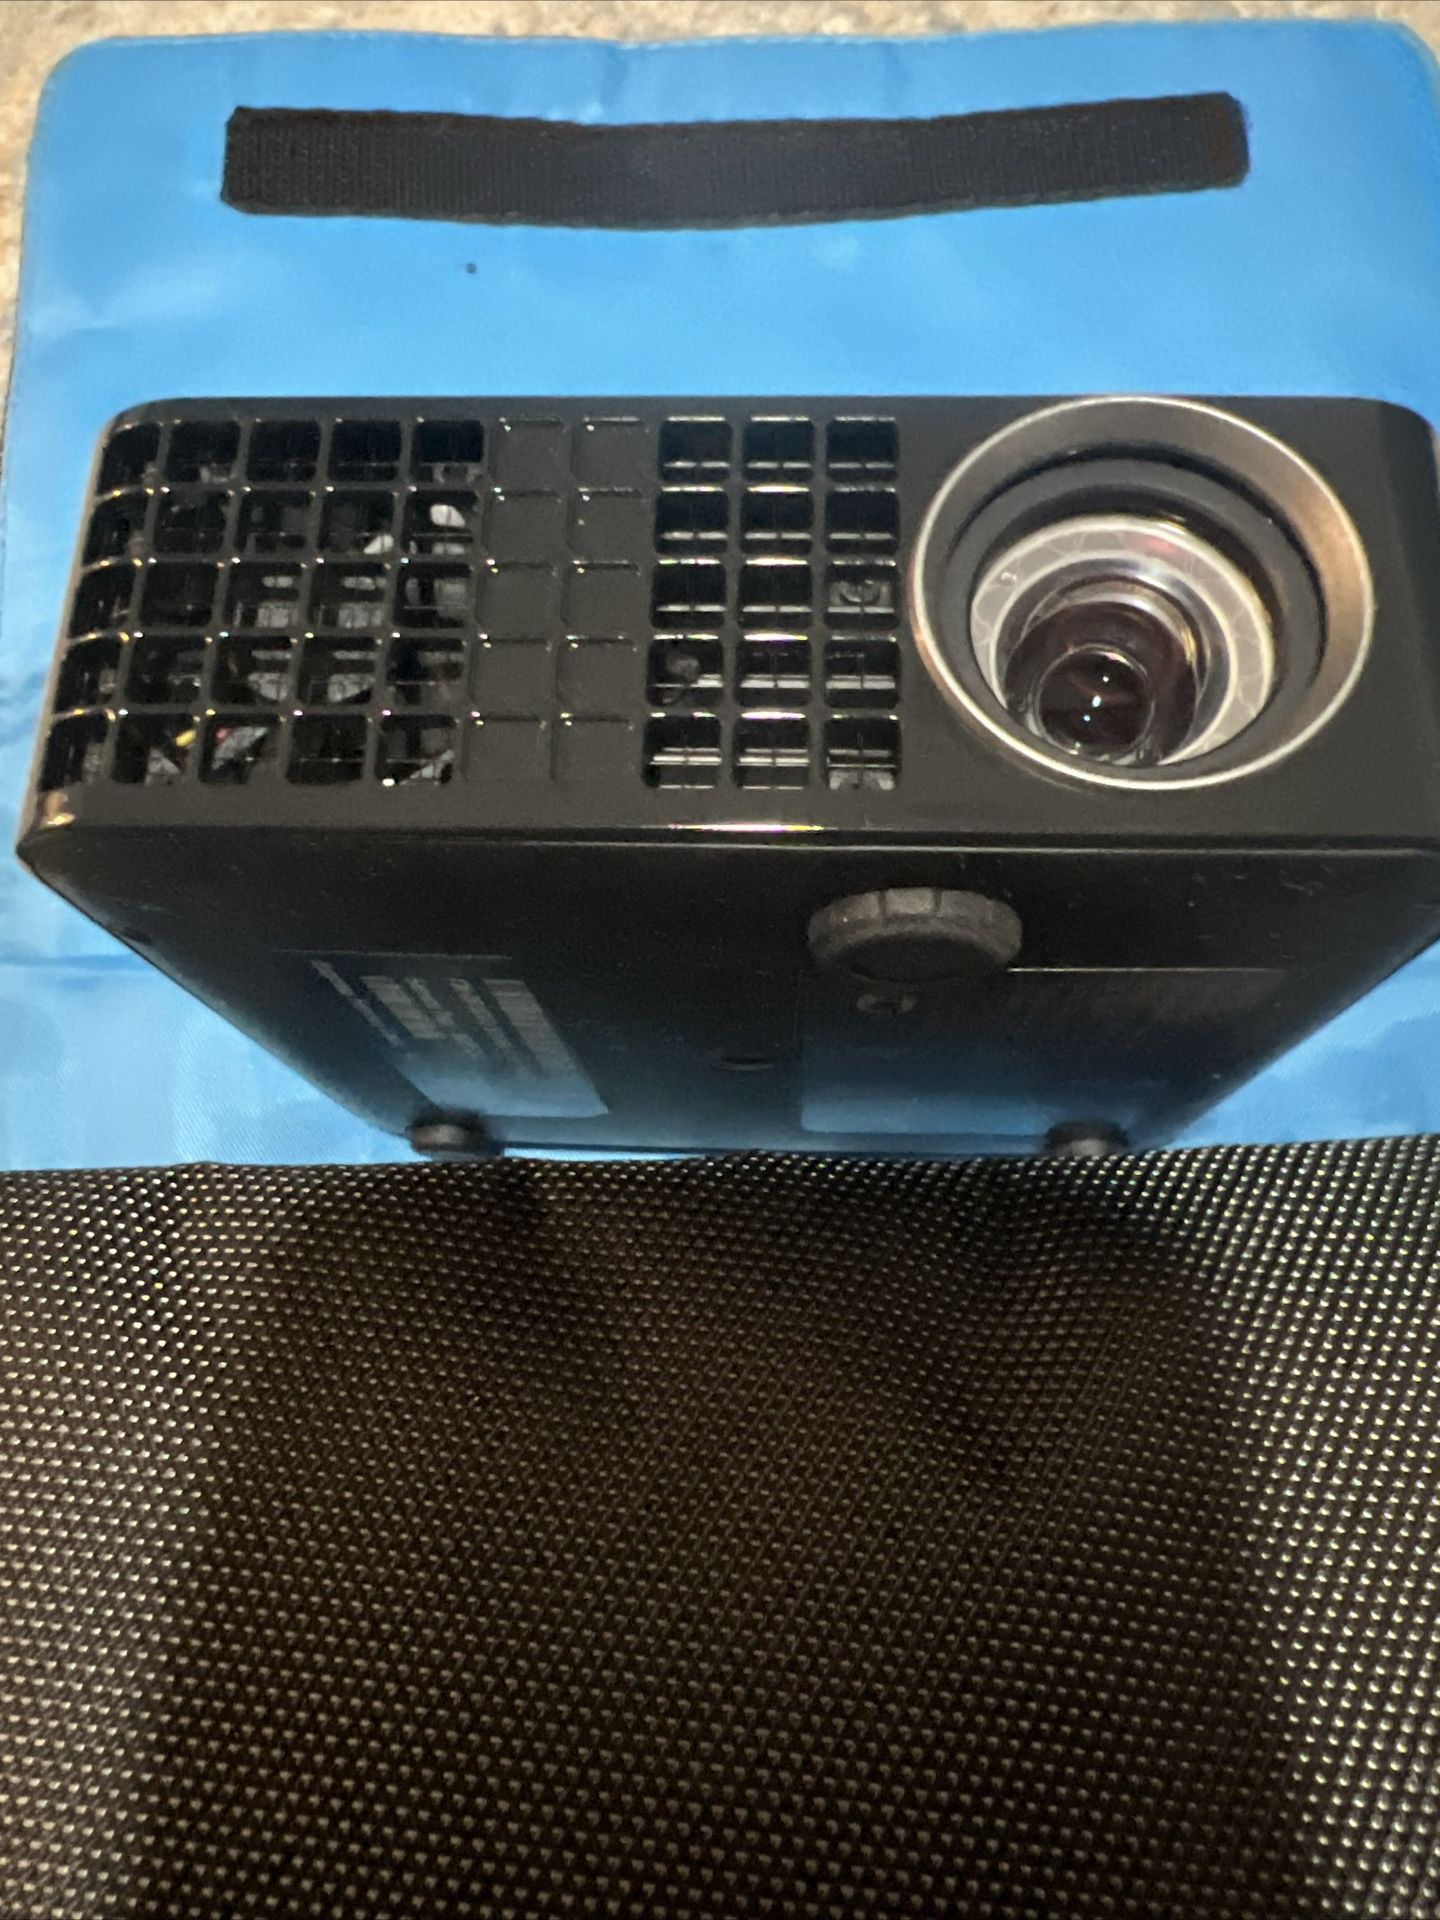 New Dell M110 Portable Projector